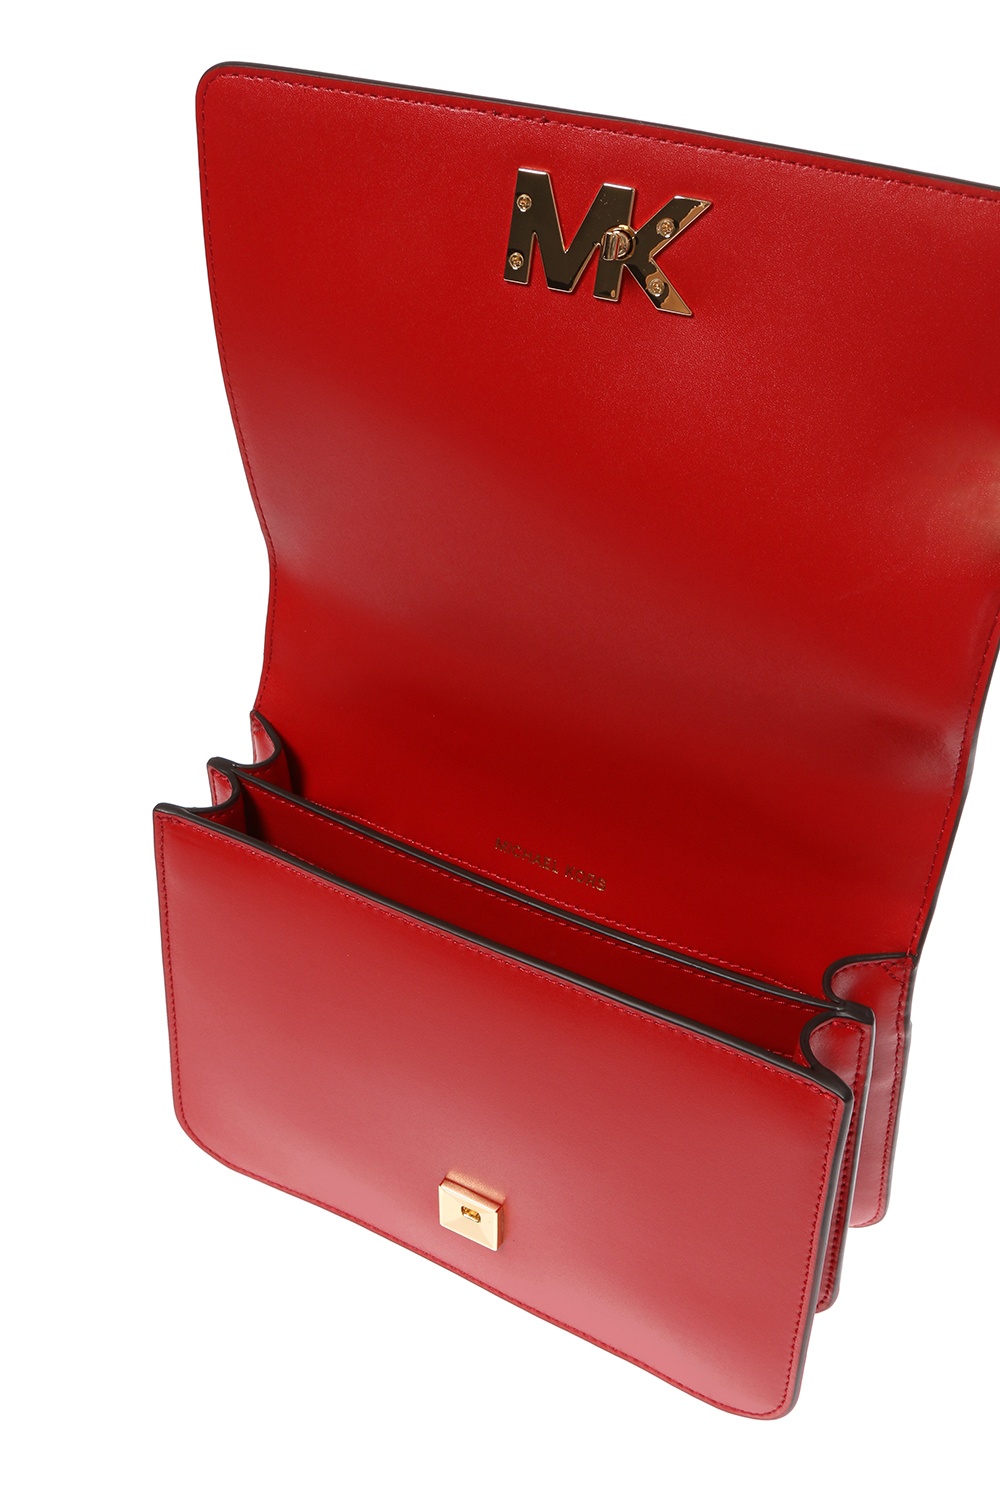 MICHAEL Michael Kors Mott Xl Wallet Clutch in Red